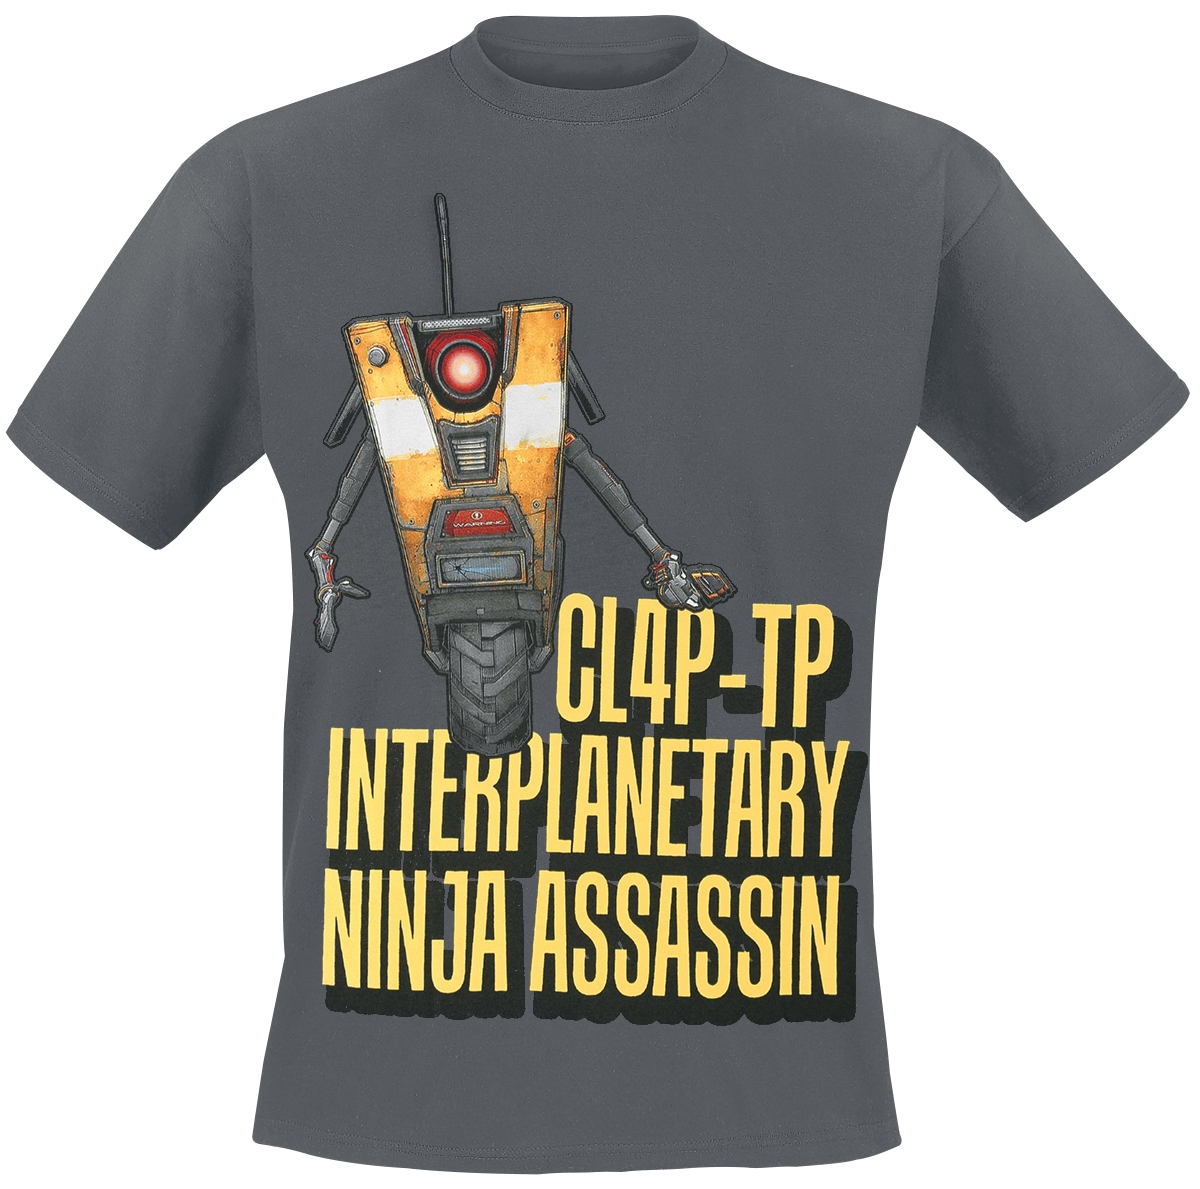 Borderlands - Claptrap - CL4P-TP Interplanetary Ninja Assassin - T-Shirt - charcoal image